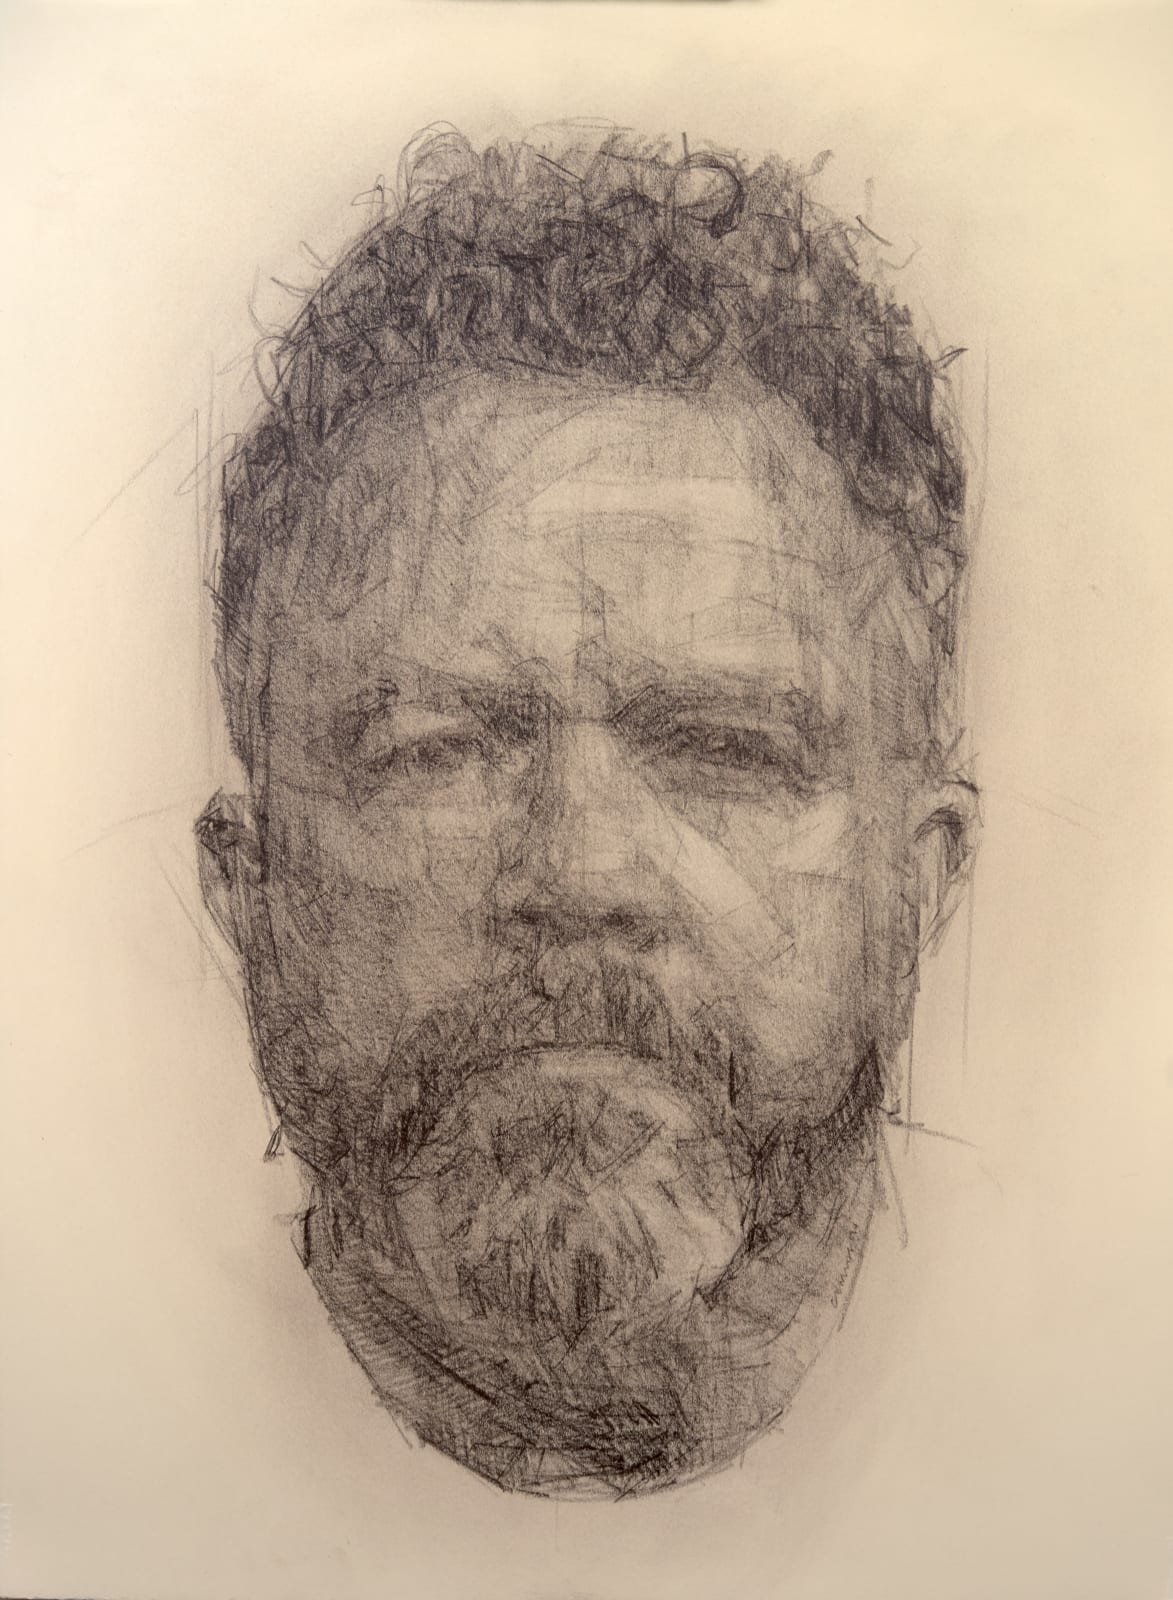 Colin Davidson, Self-Portrait study, 2019